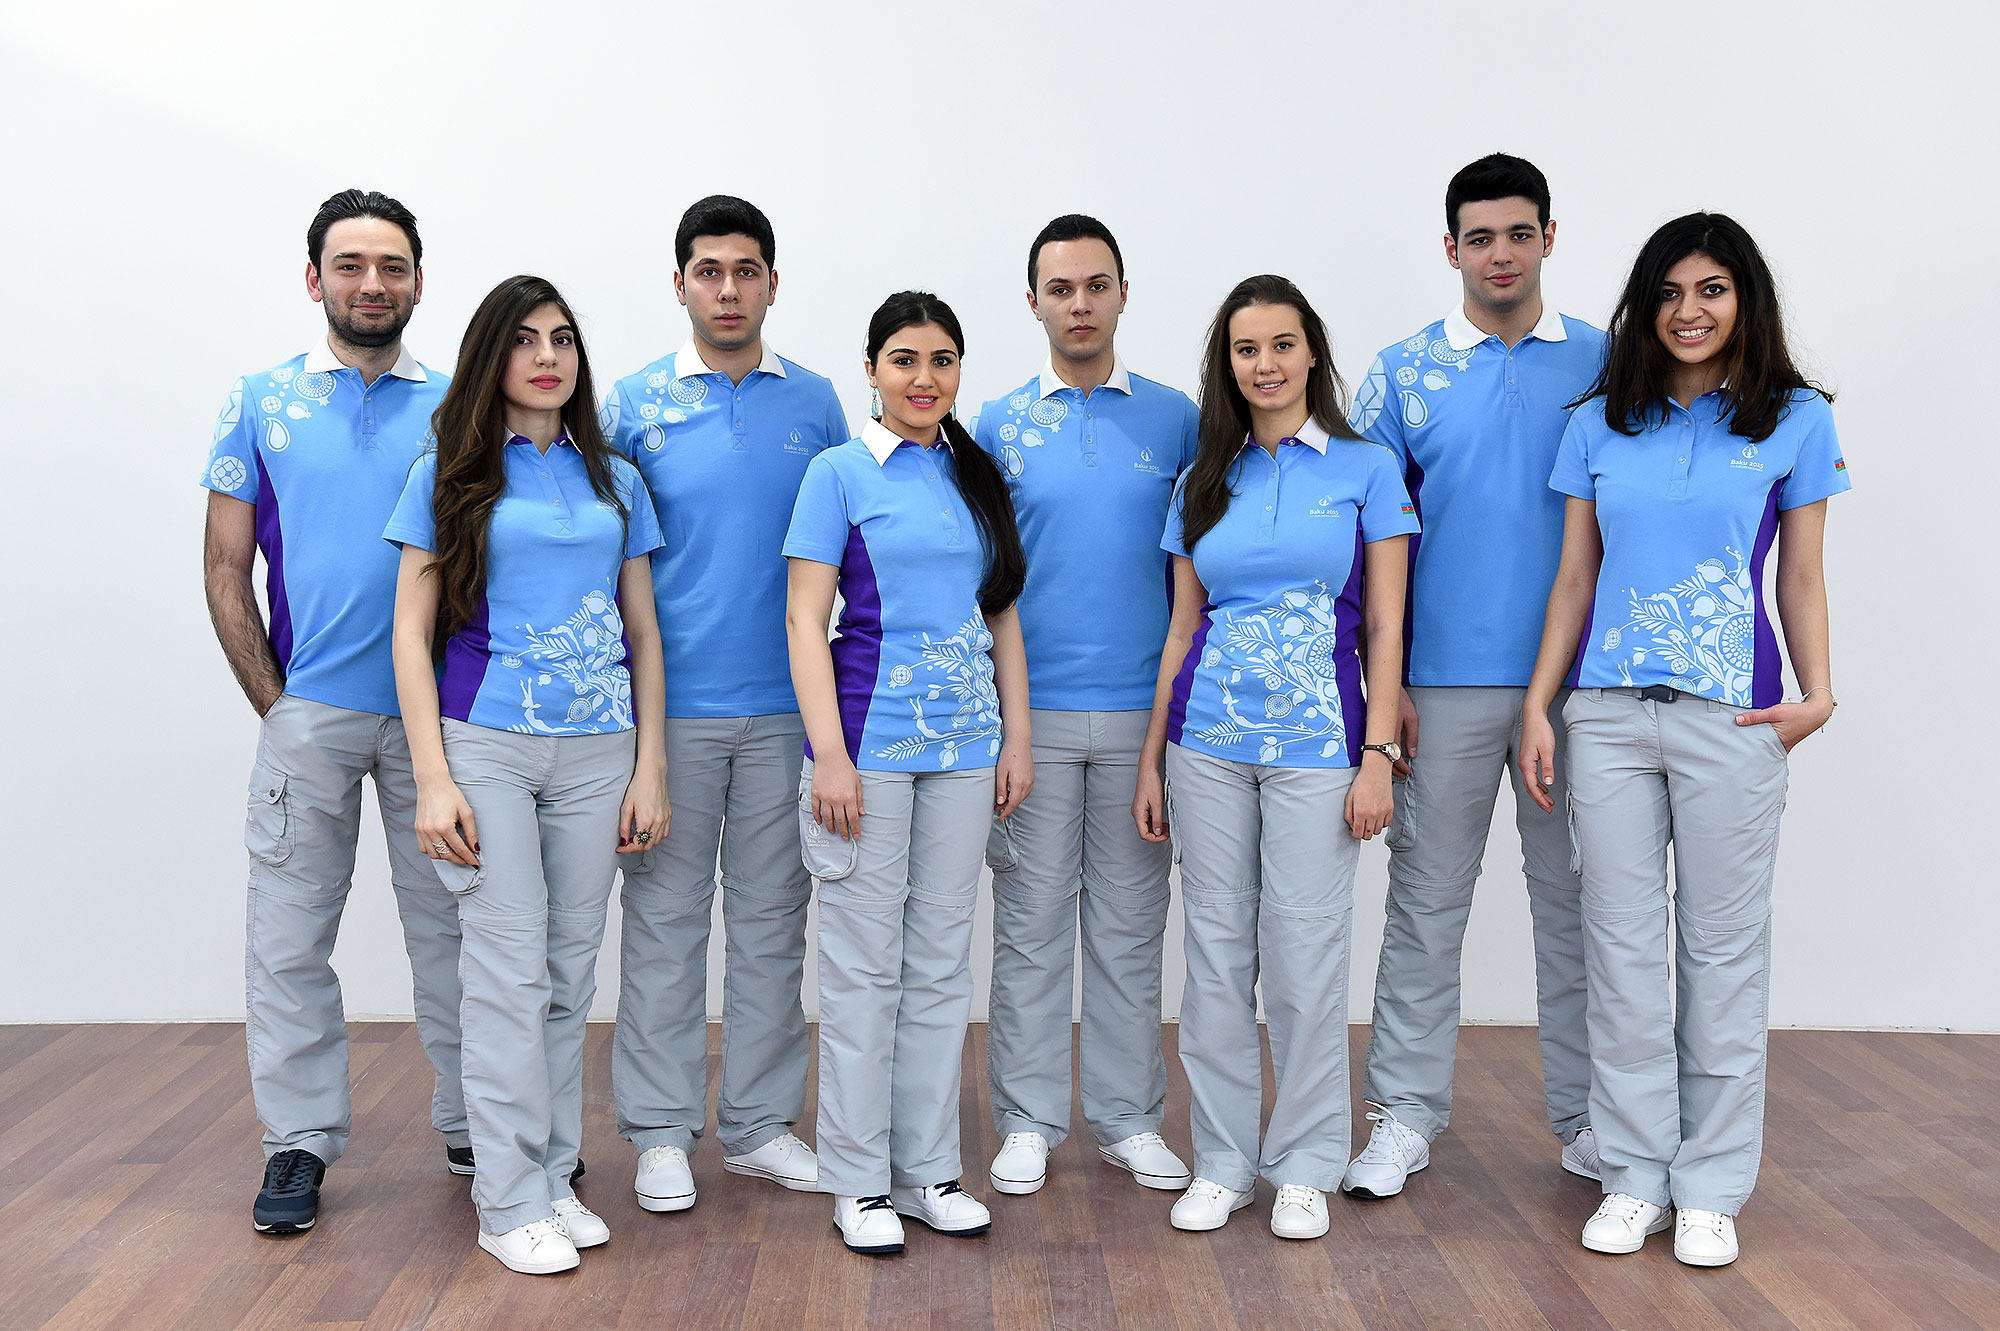 Baku 2015 volunteer uniform unveiled